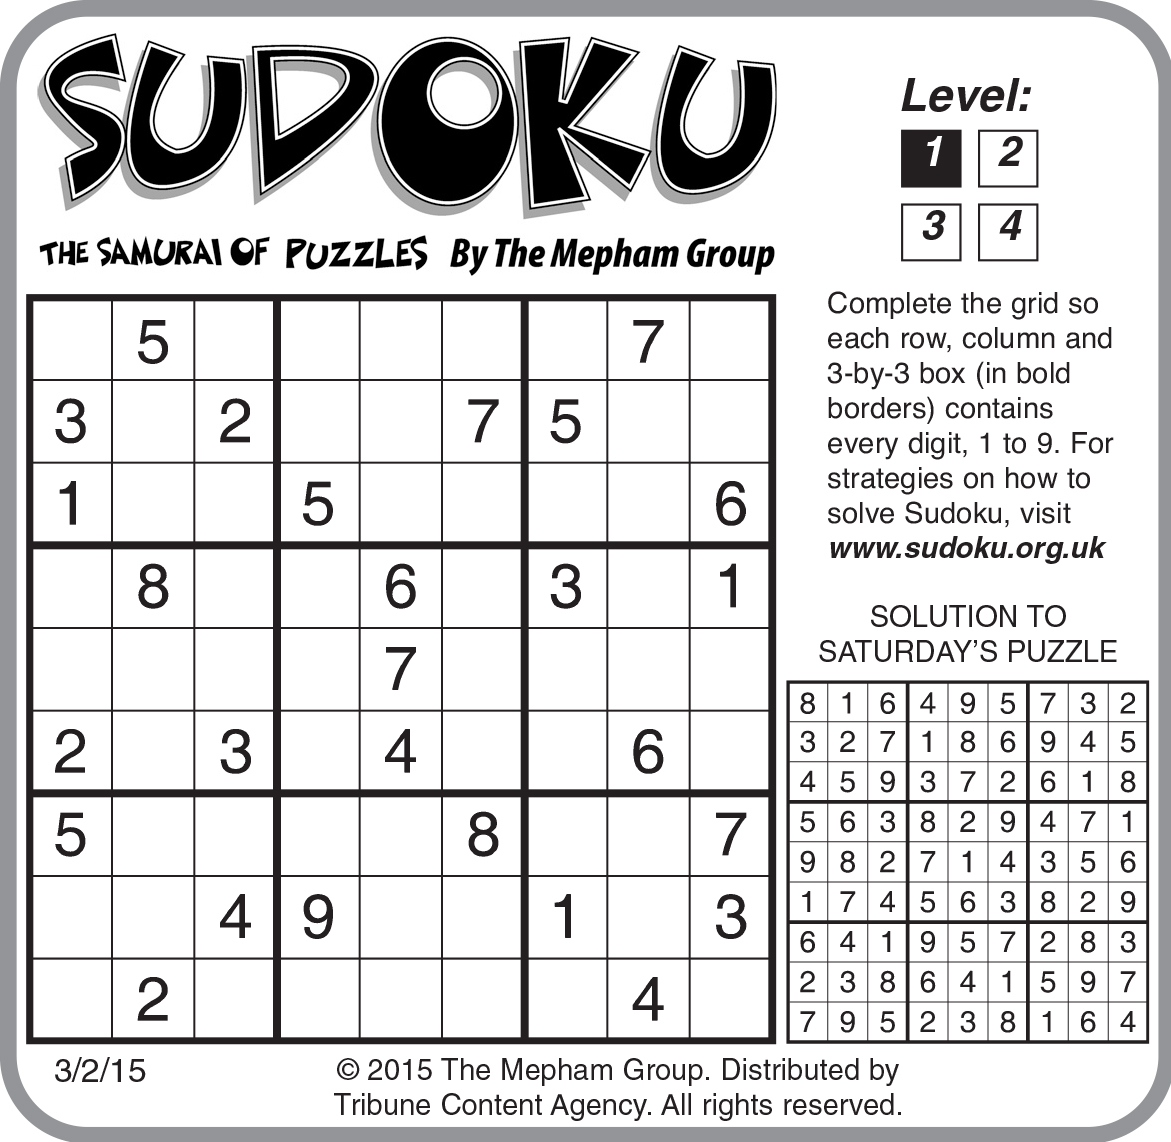 Tribune Printable Sudoku